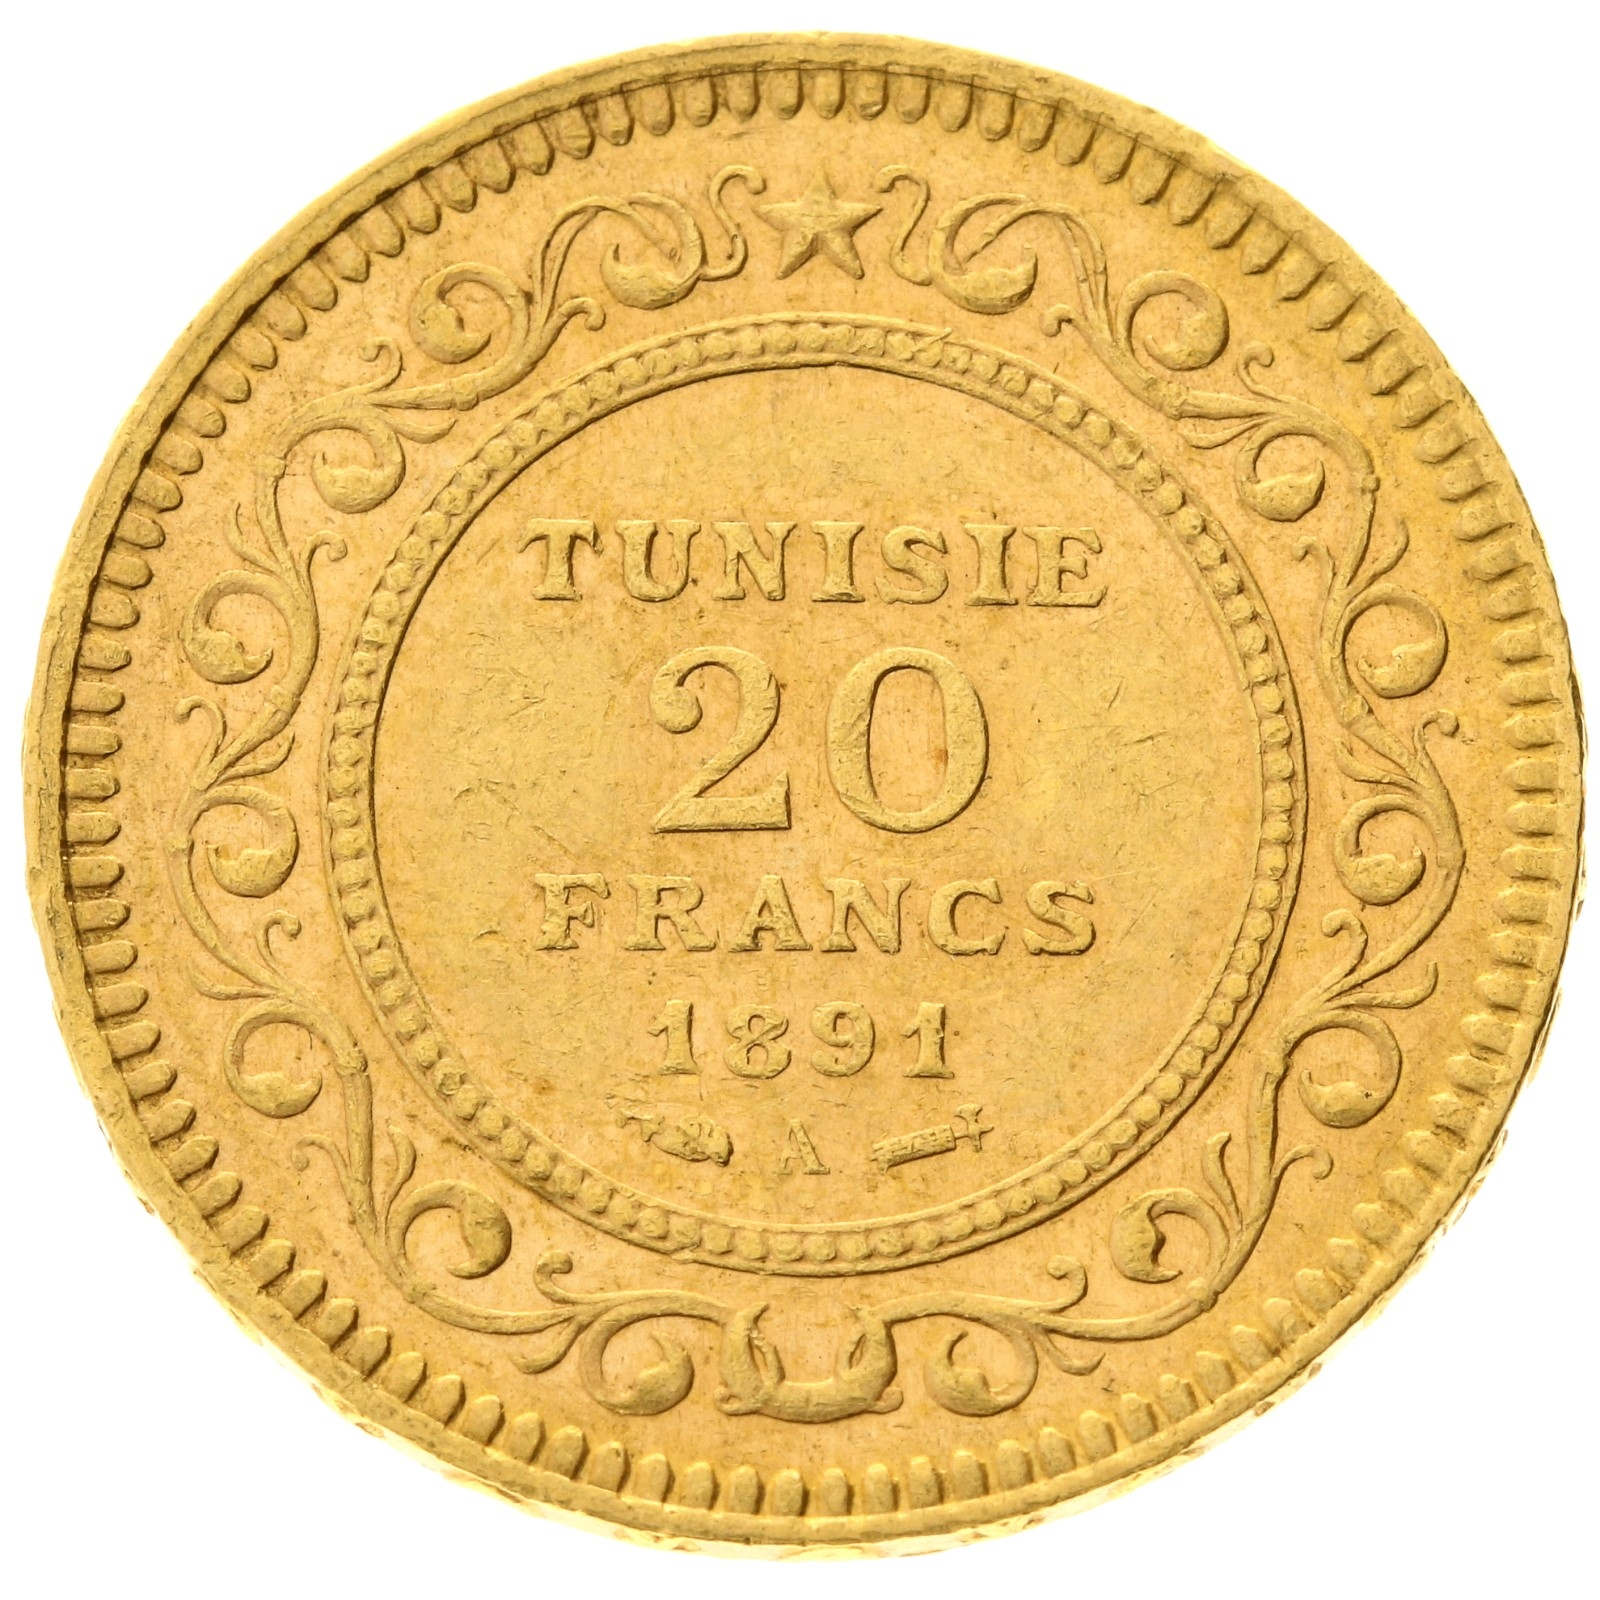 Tunisia - 20 francs - 1891 - A - Ali Bey